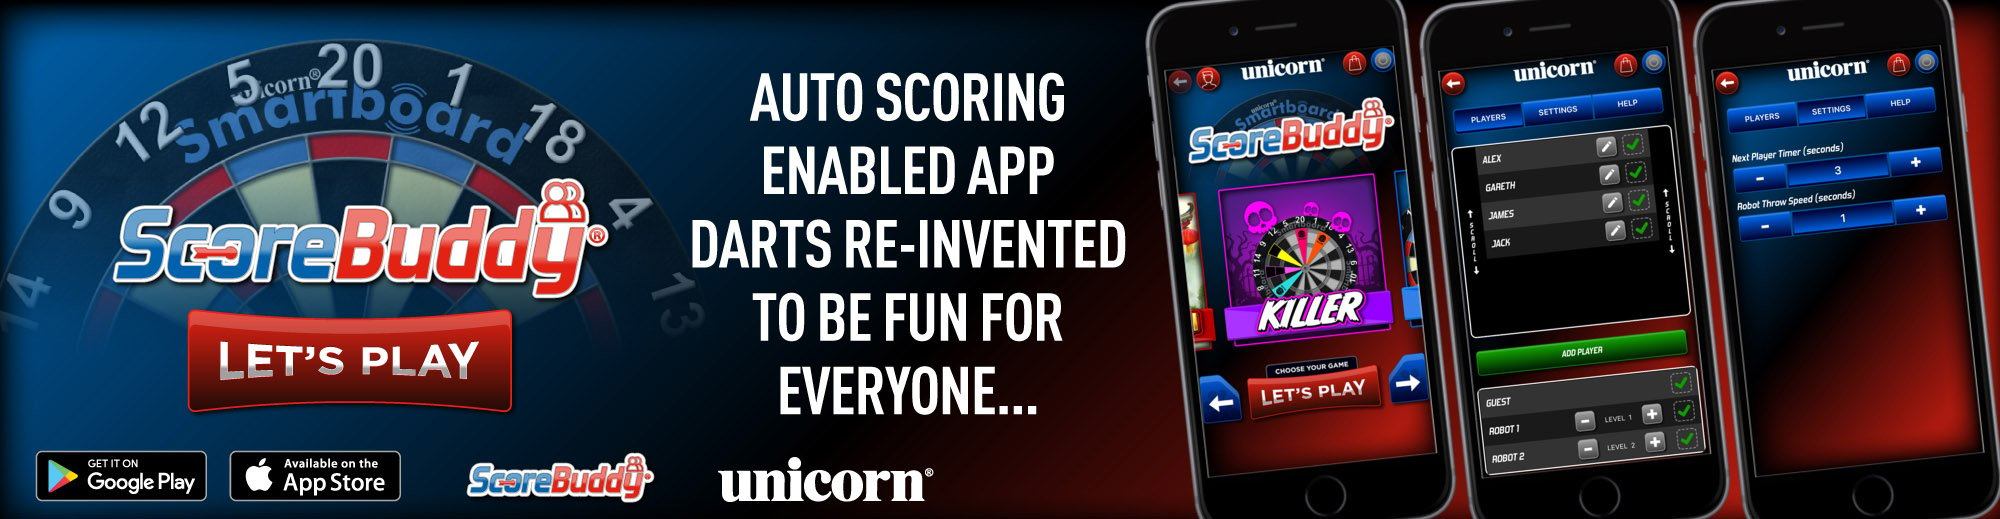 scorebuddy-app-graphic.jpg